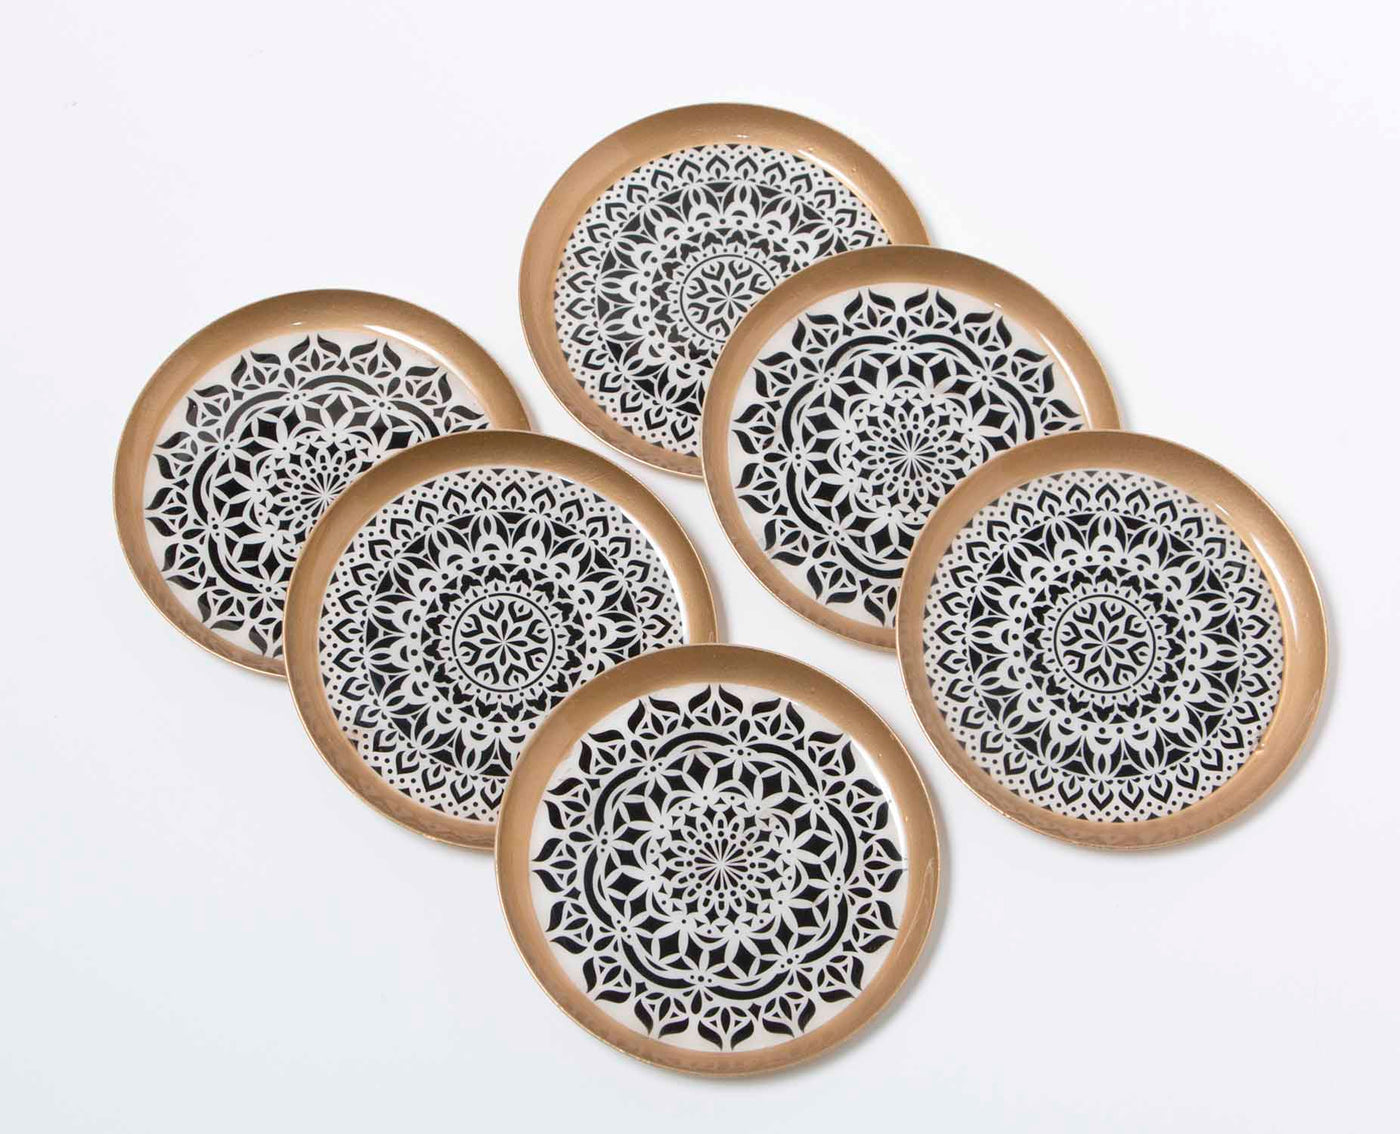 Mandala Art Print Coaster Set of 6 - Dining & Kitchen - 4